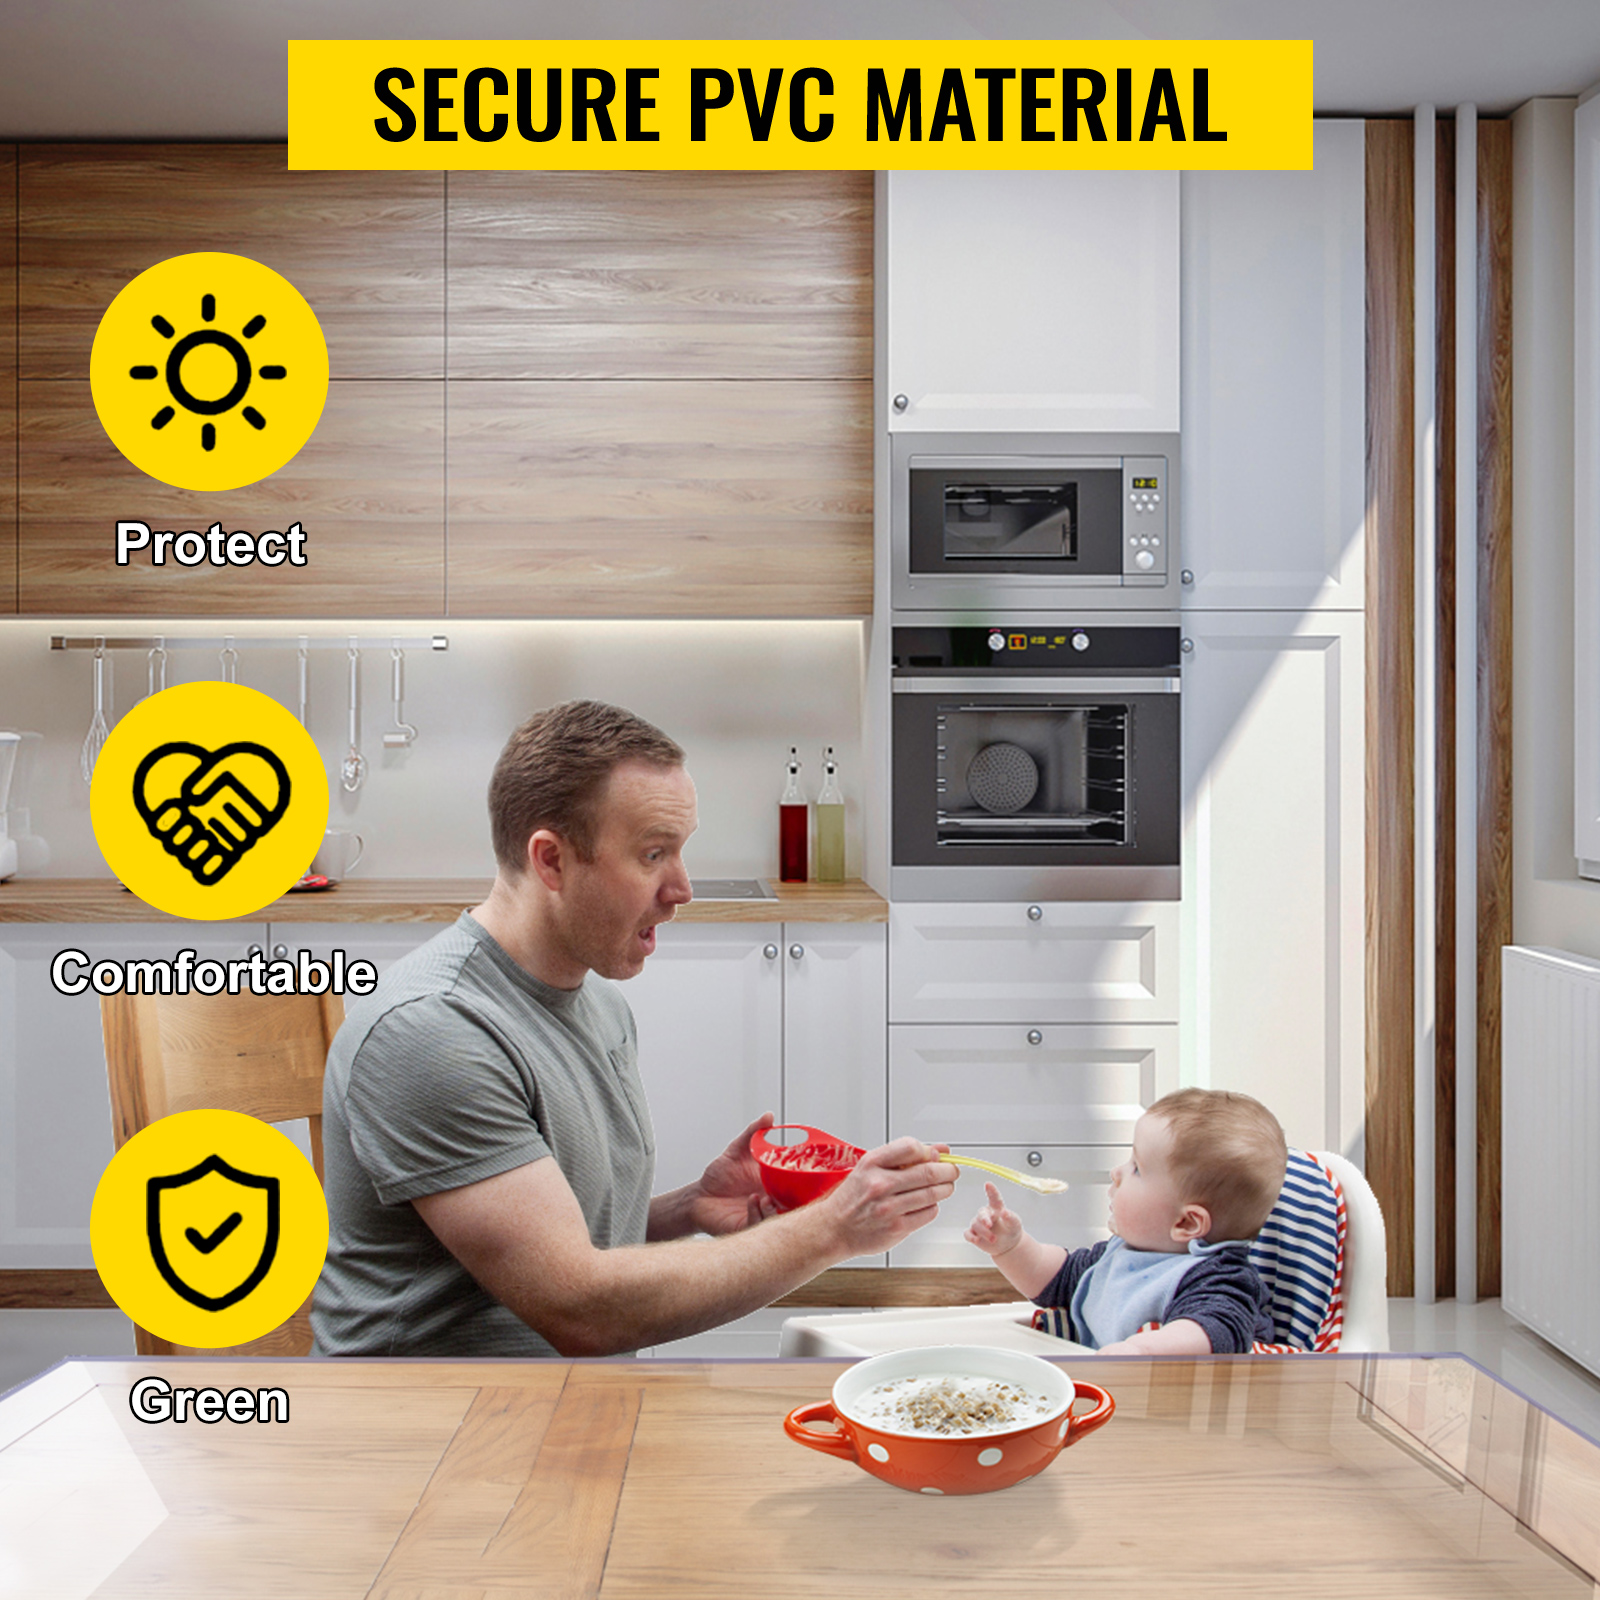  Protector de mesa de PVC transparente de 0.079 in para mantel  de plástico, resistente al agua, resistente al calor, para mesa de comedor,  oficina, mesa de café, mesa de café, tamaño